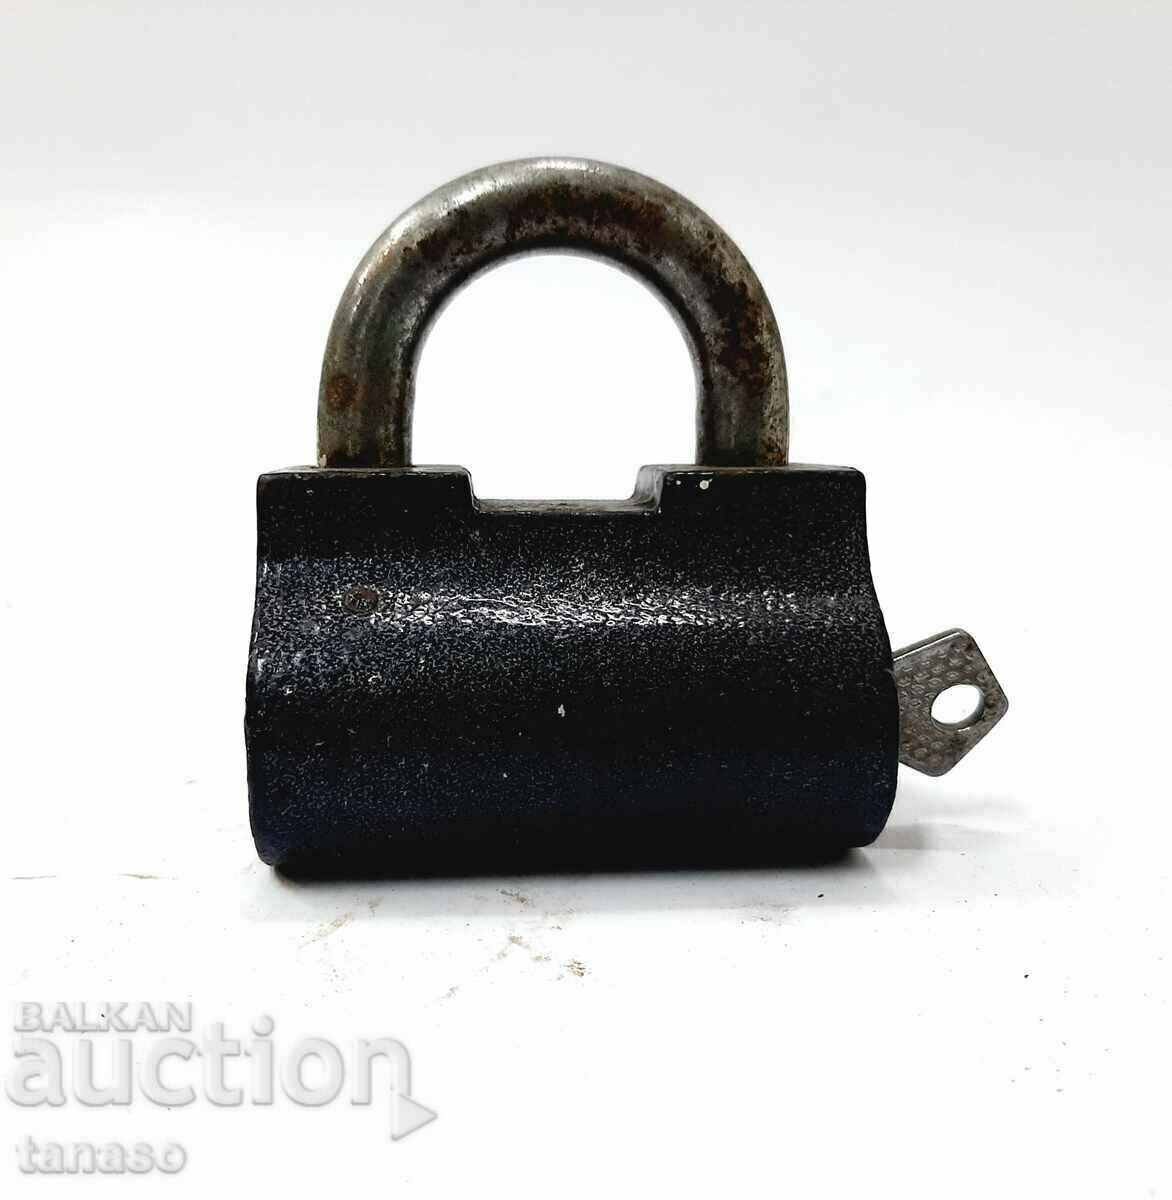 Old heavy Russian padlock with key(7.6)